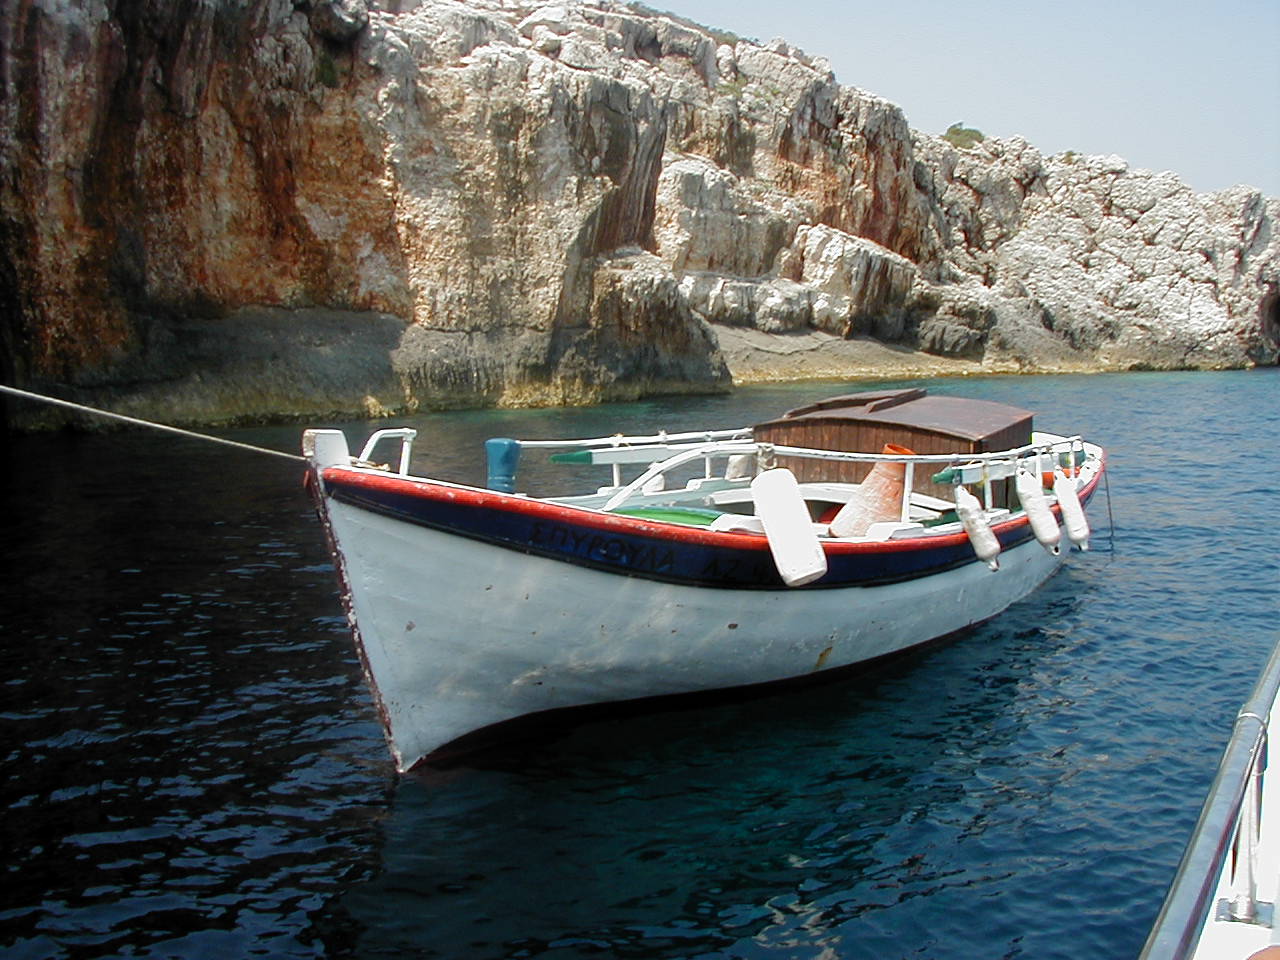 Leisurely Boating - Activities, Boat | Water | Ocean | Greece | Relax